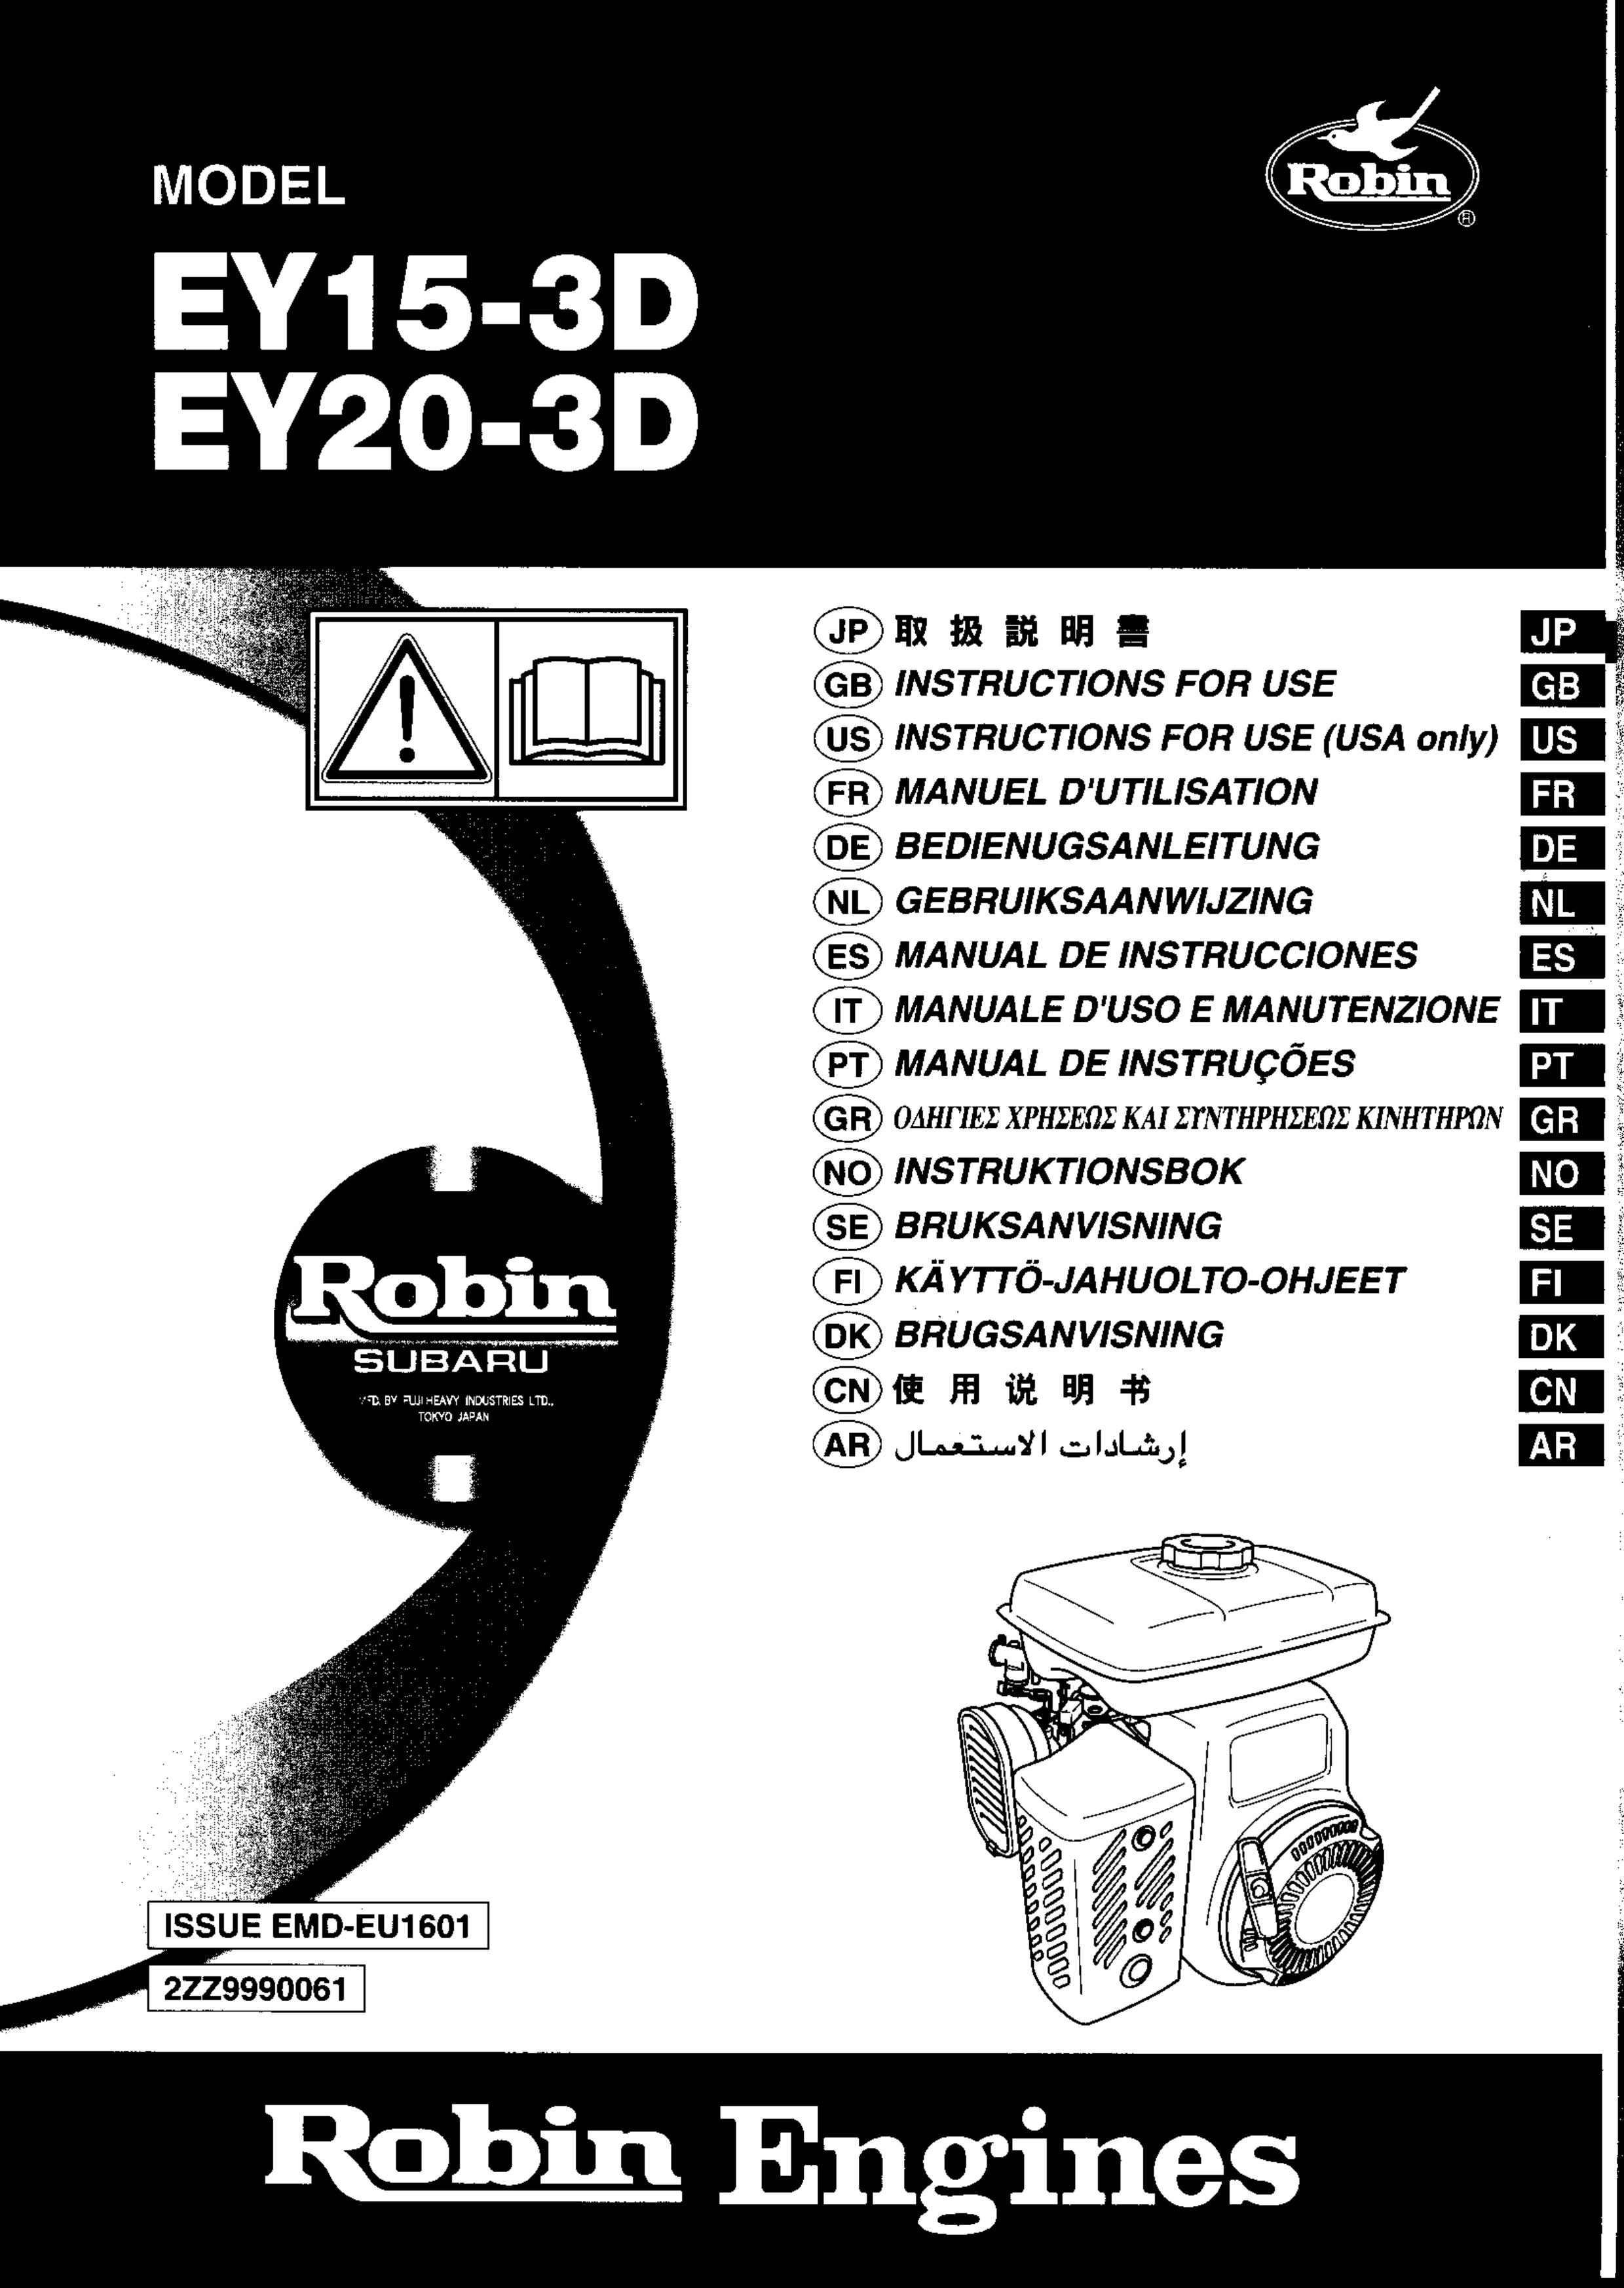 Subaru Robin Power Products EY20-3D Portable Generator User Manual